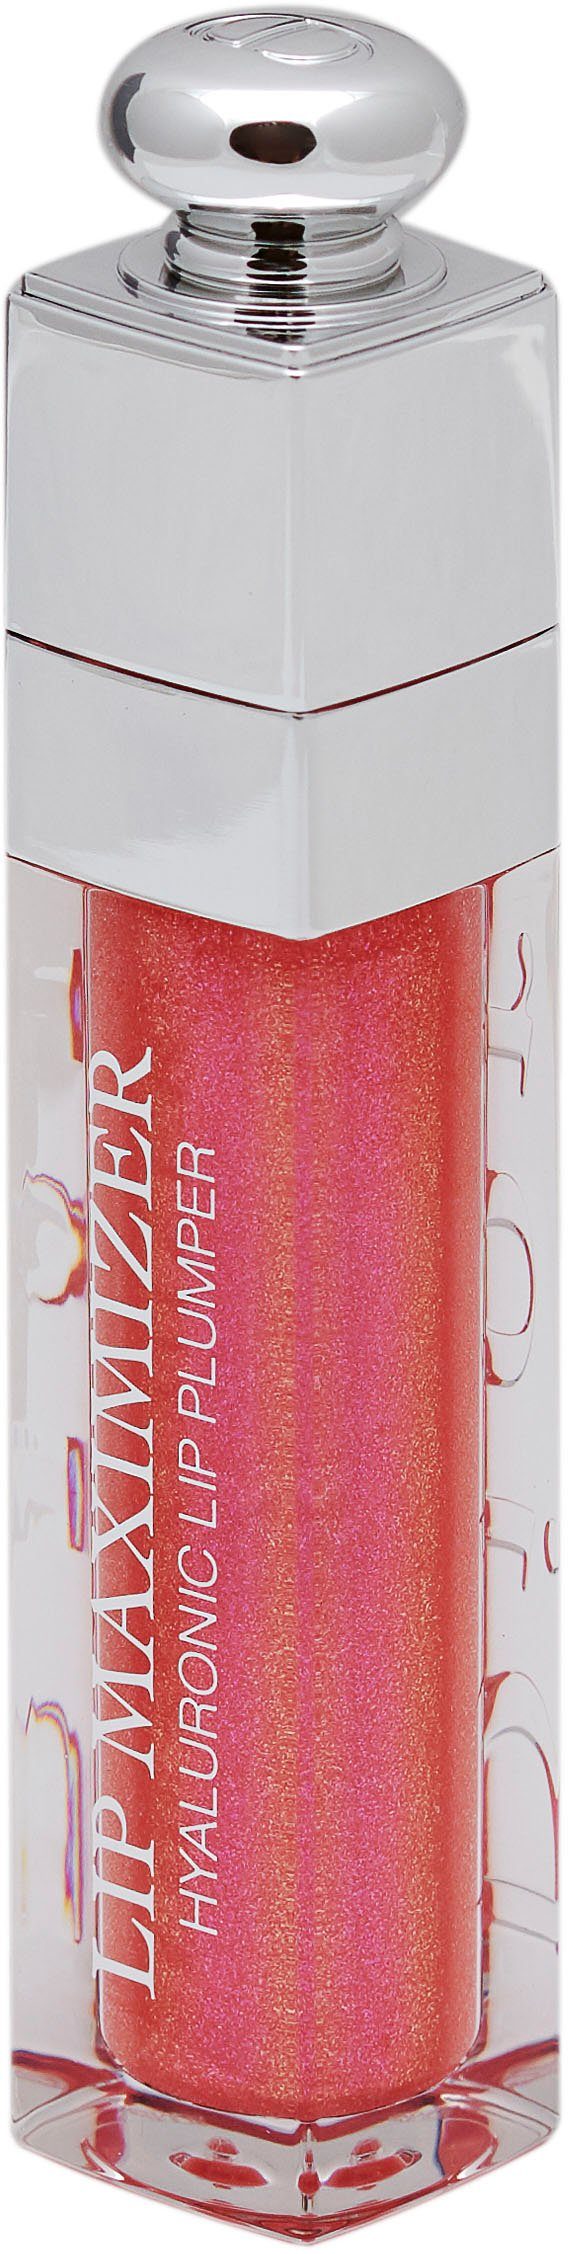 Holo Lip Lipgloss Addict Maximizer Pink 010 Dior